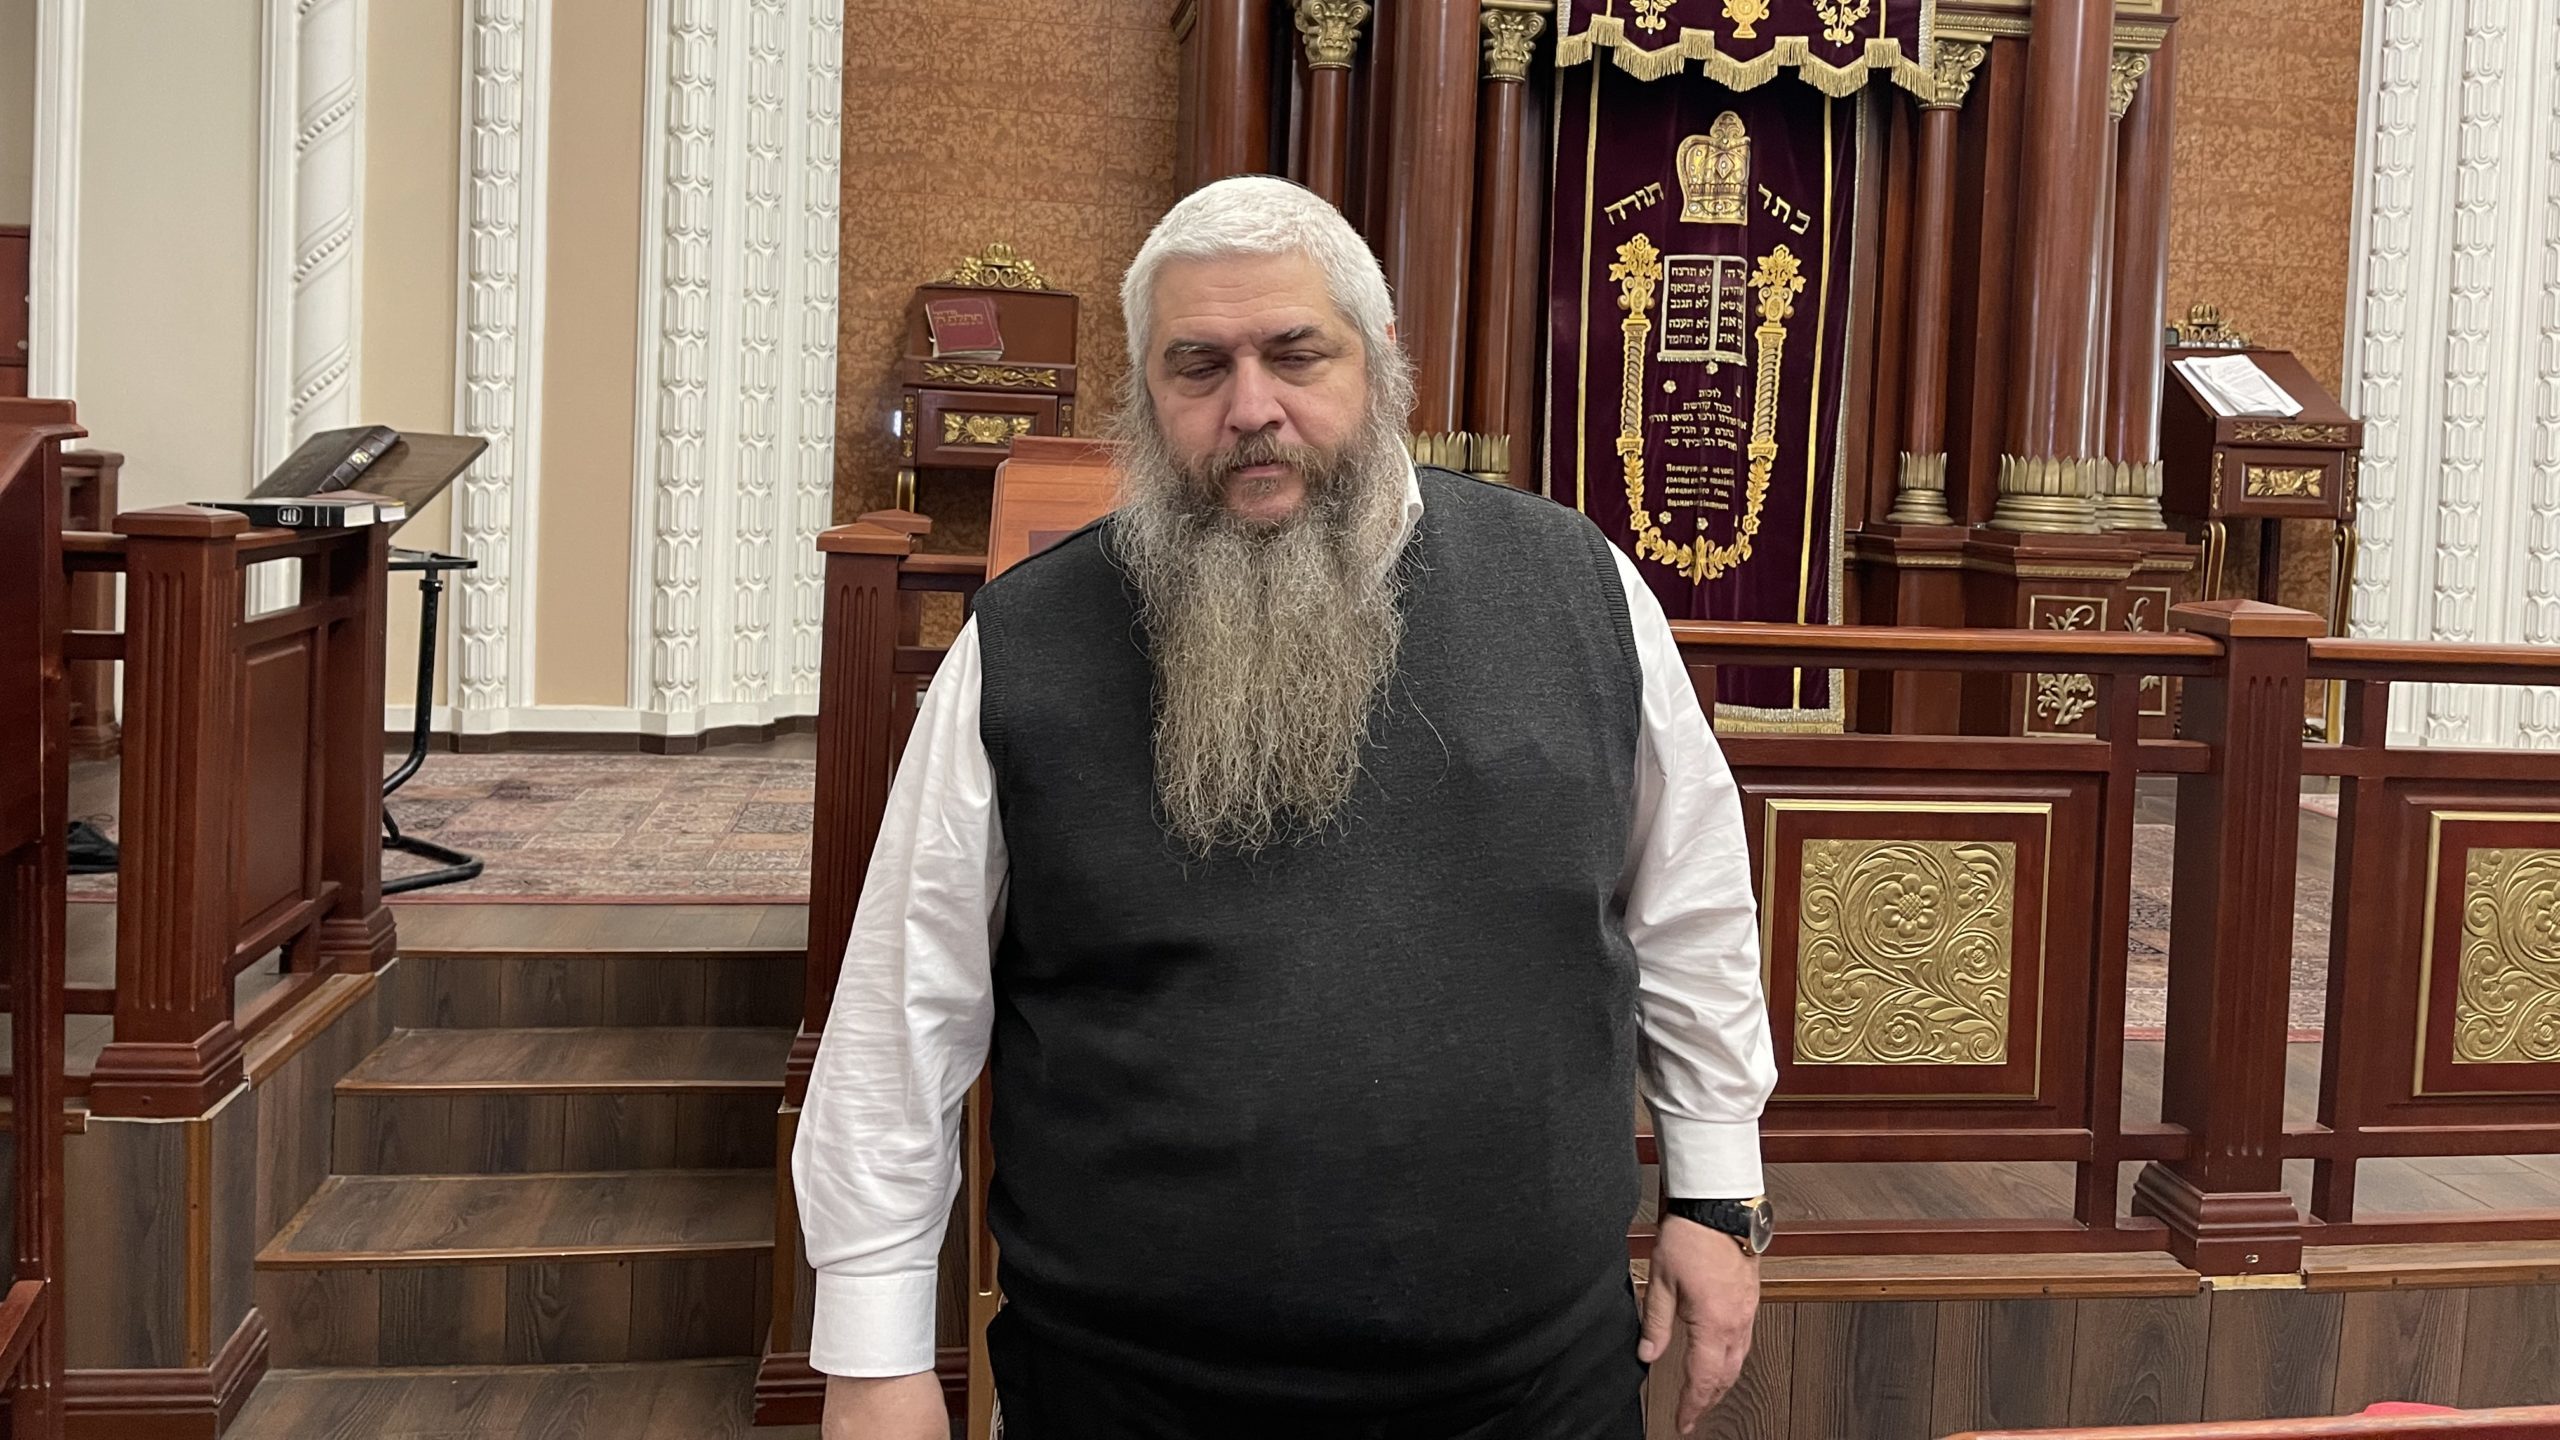 Ukraine Chief Rabbi Helps To Evacuate Jewish Refugees to Safety (Video Report)